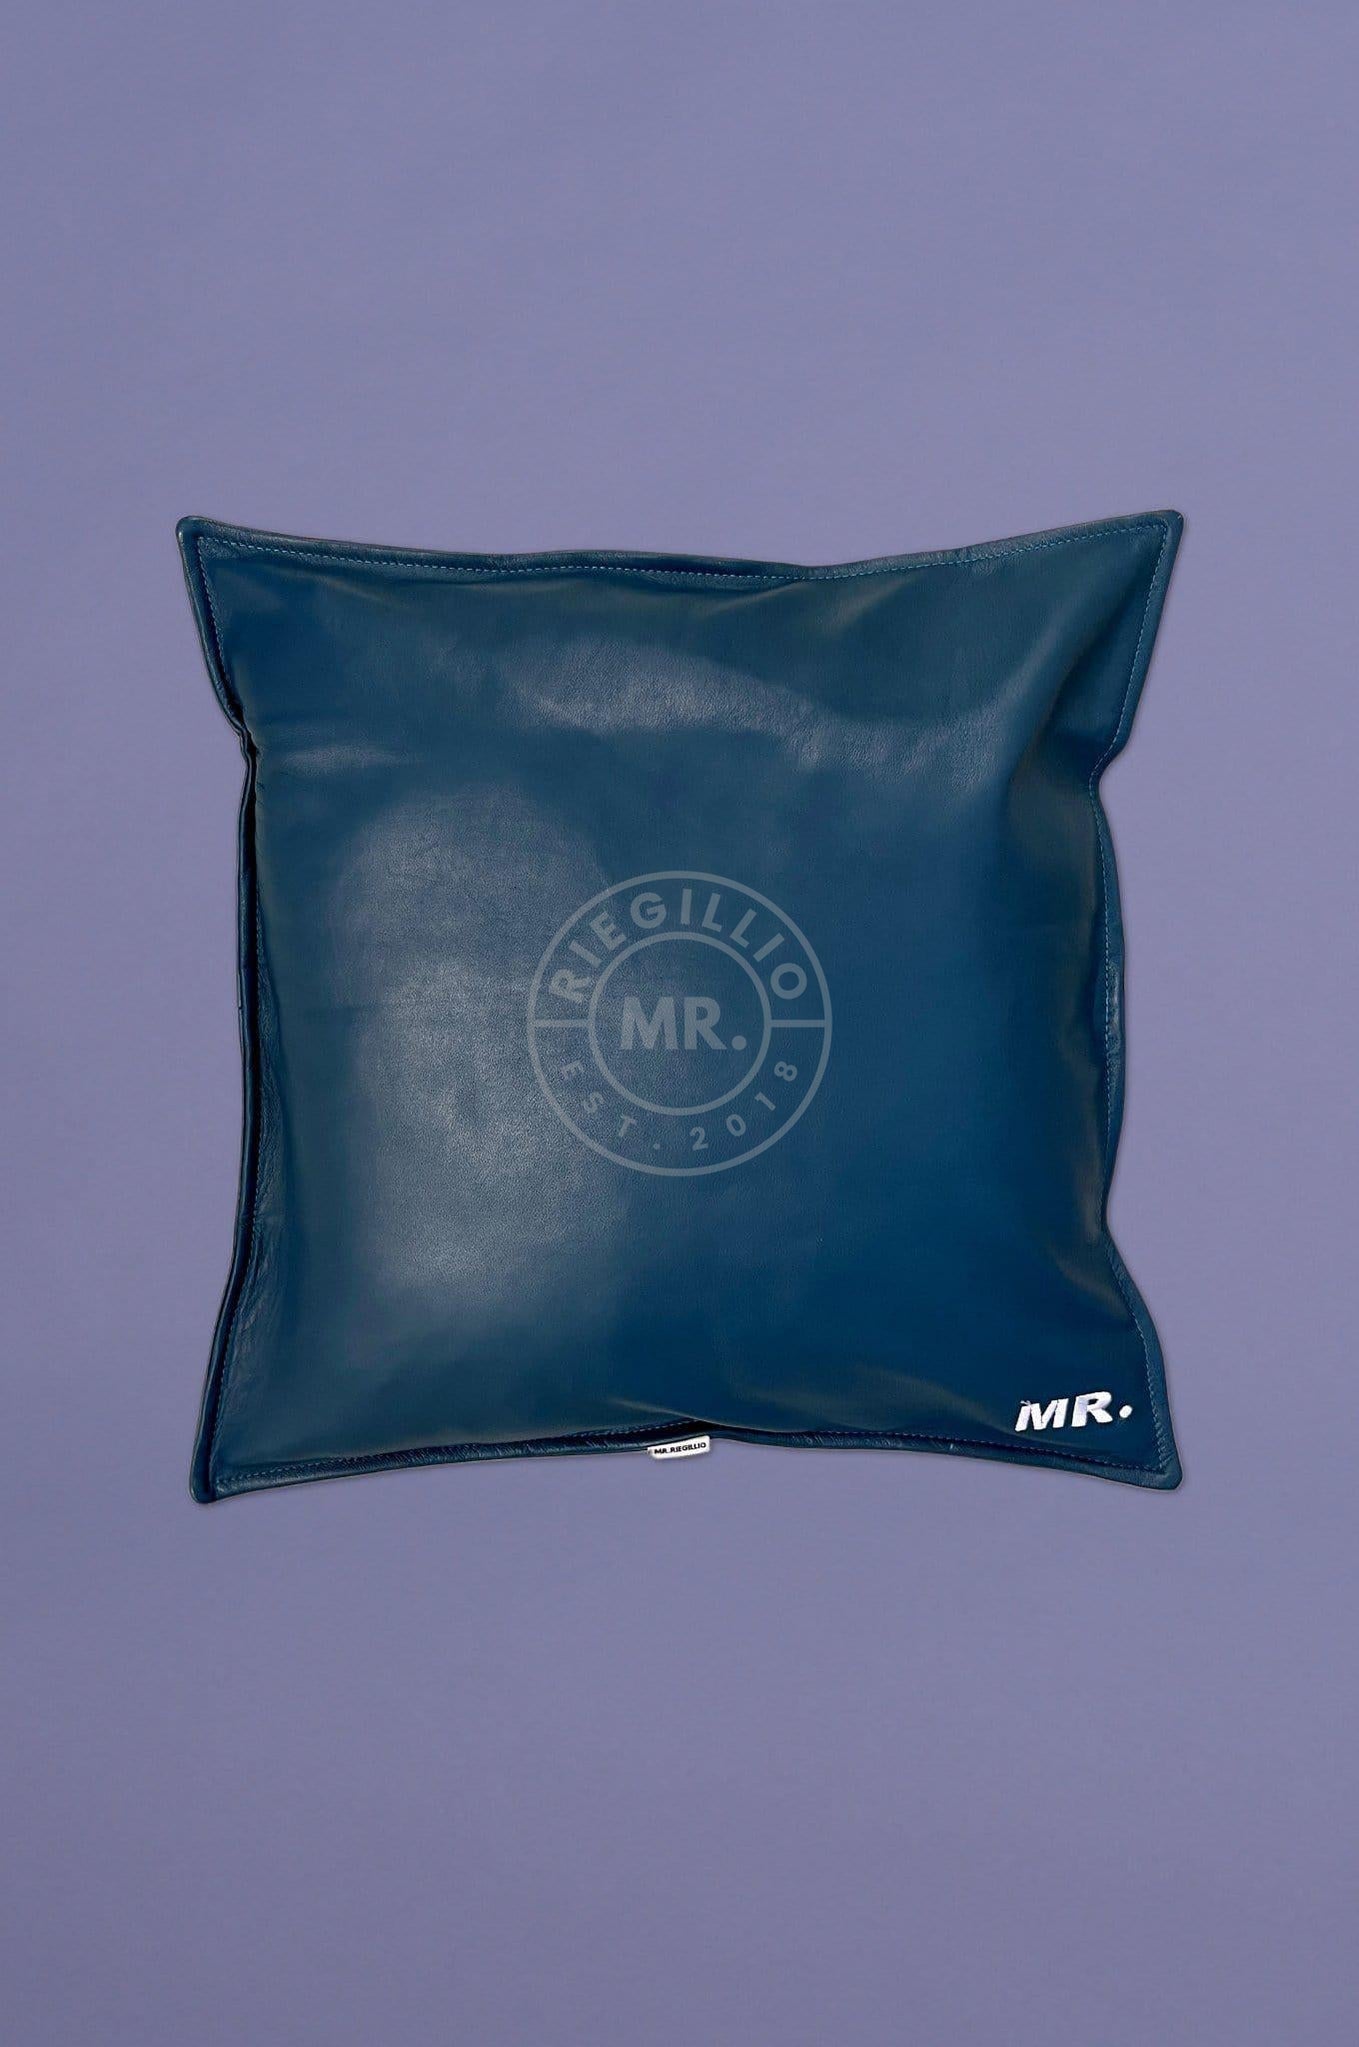 Jeans Blue Leather Pillow-at MR. Riegillio